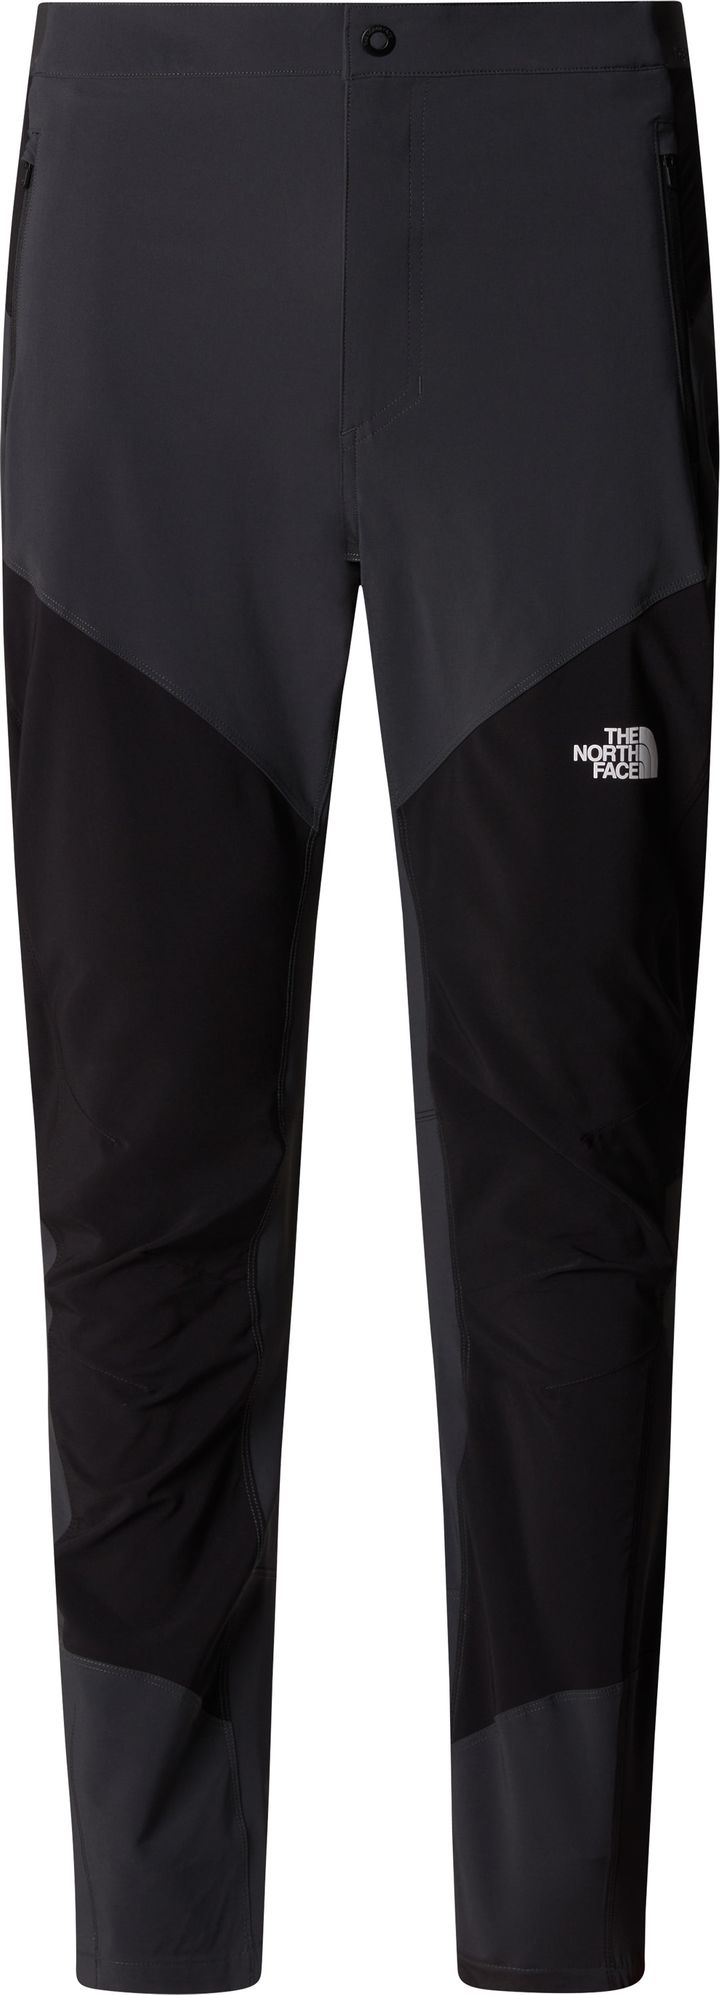 The North Face Men's Felik Slim Tapered Pants Asphalt Grey/TNF Black The North Face